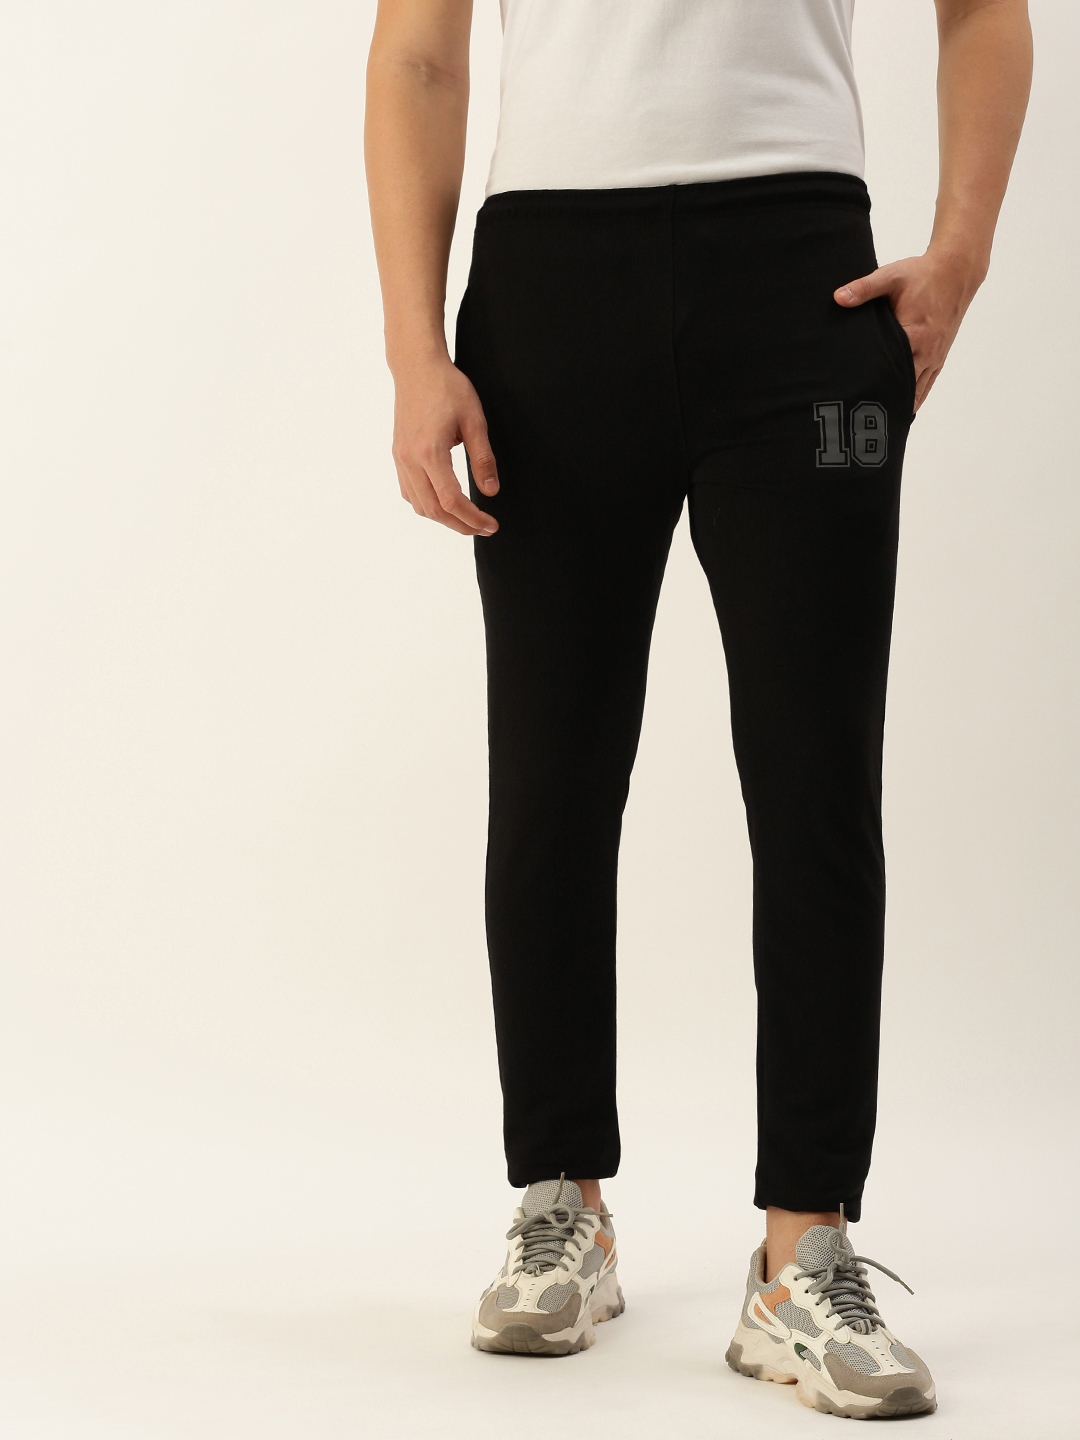 Printed Cotton Slim Fit Women's Track Pants